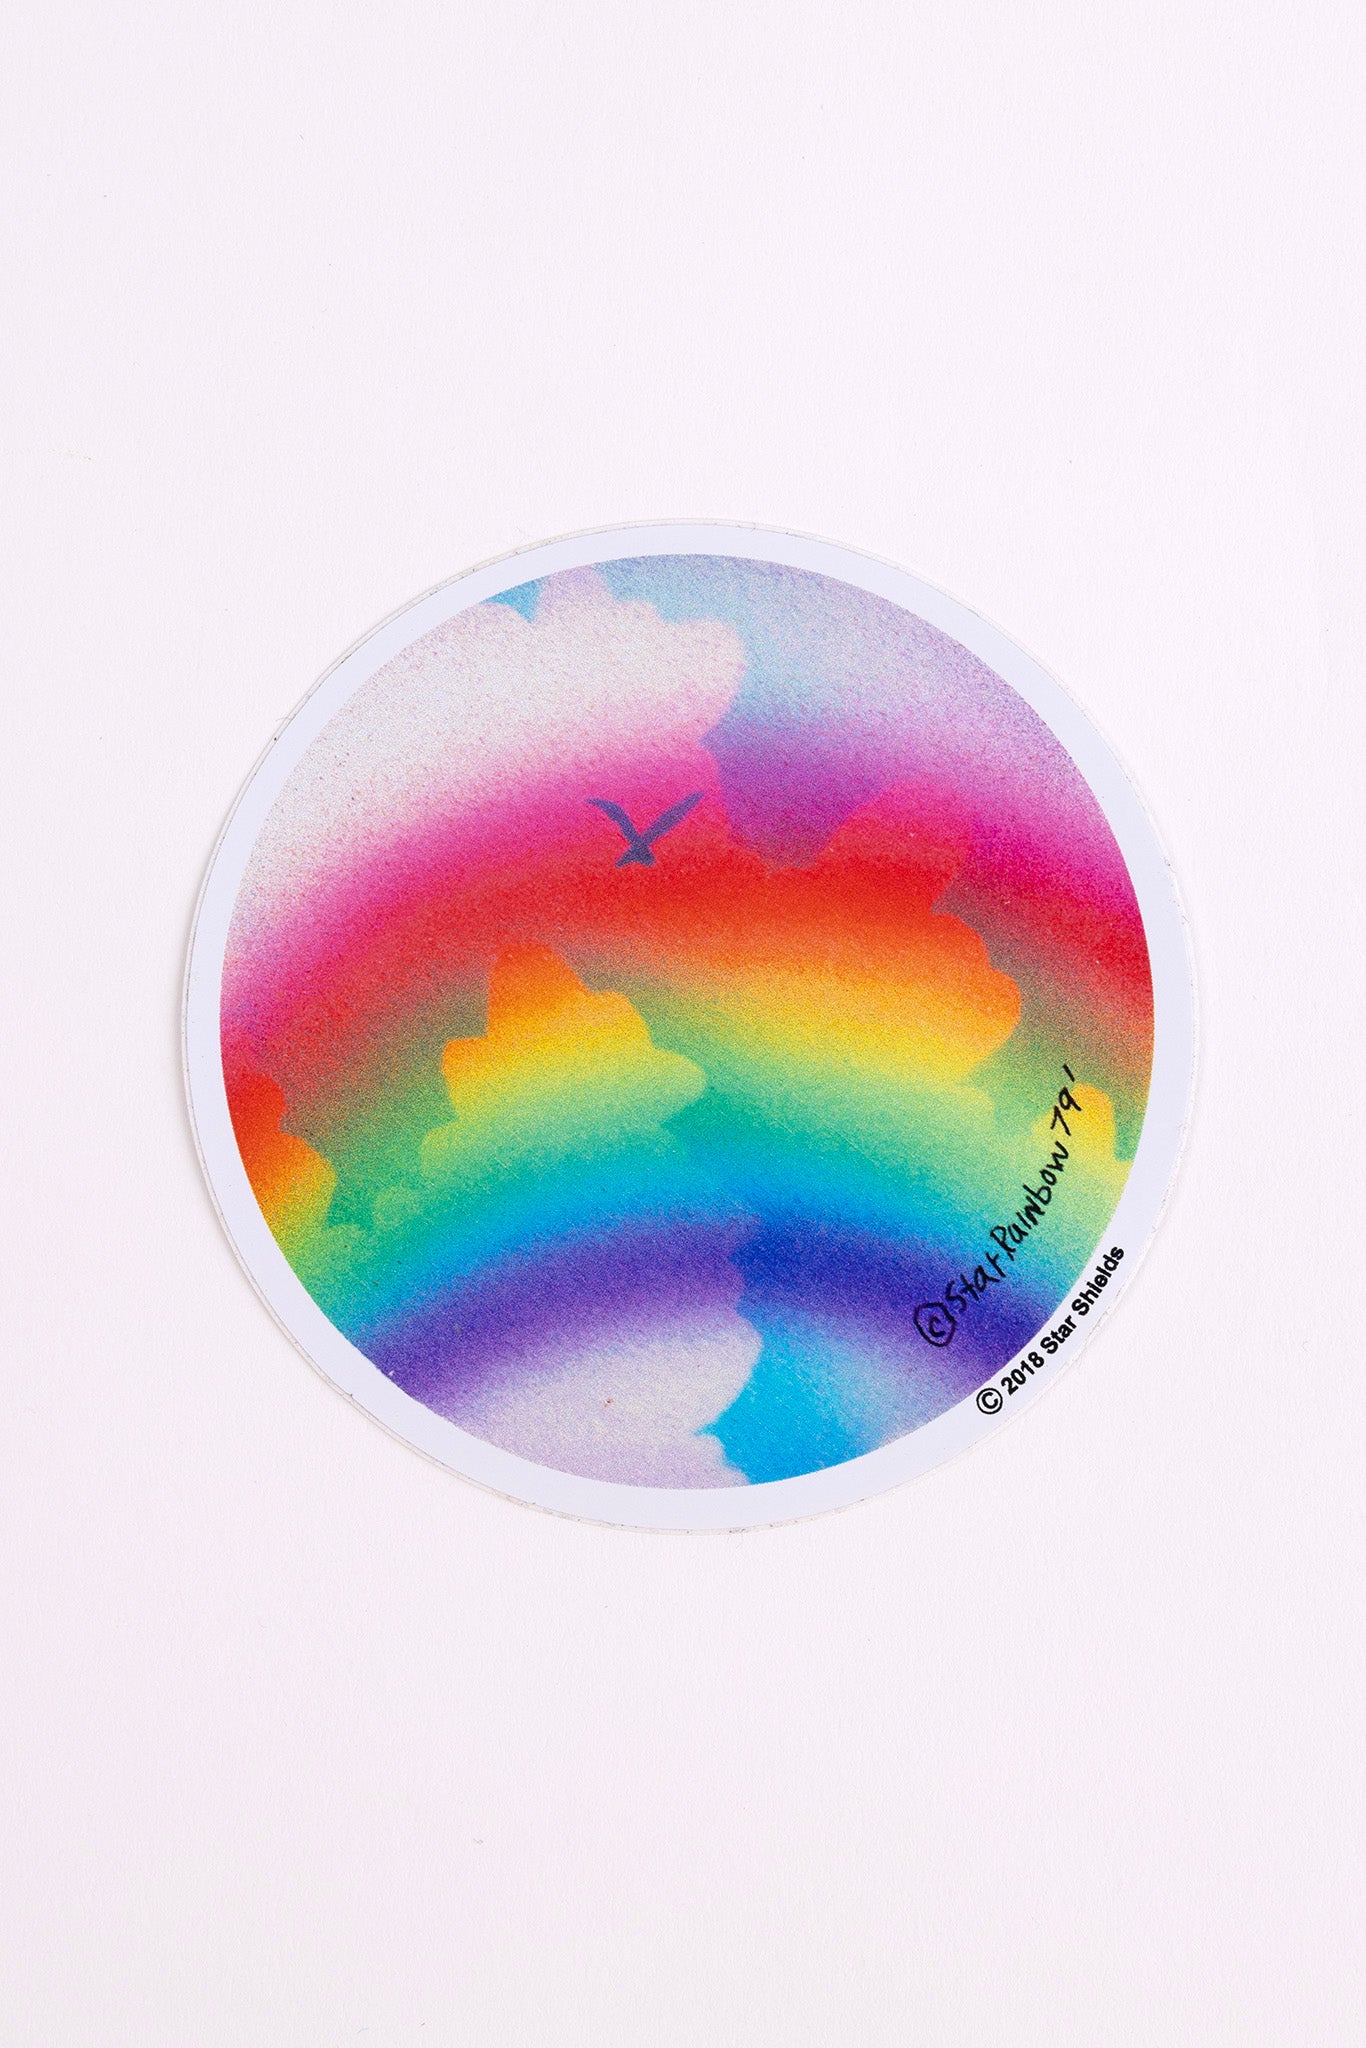 Starman- Rainbow Clouds Sticker